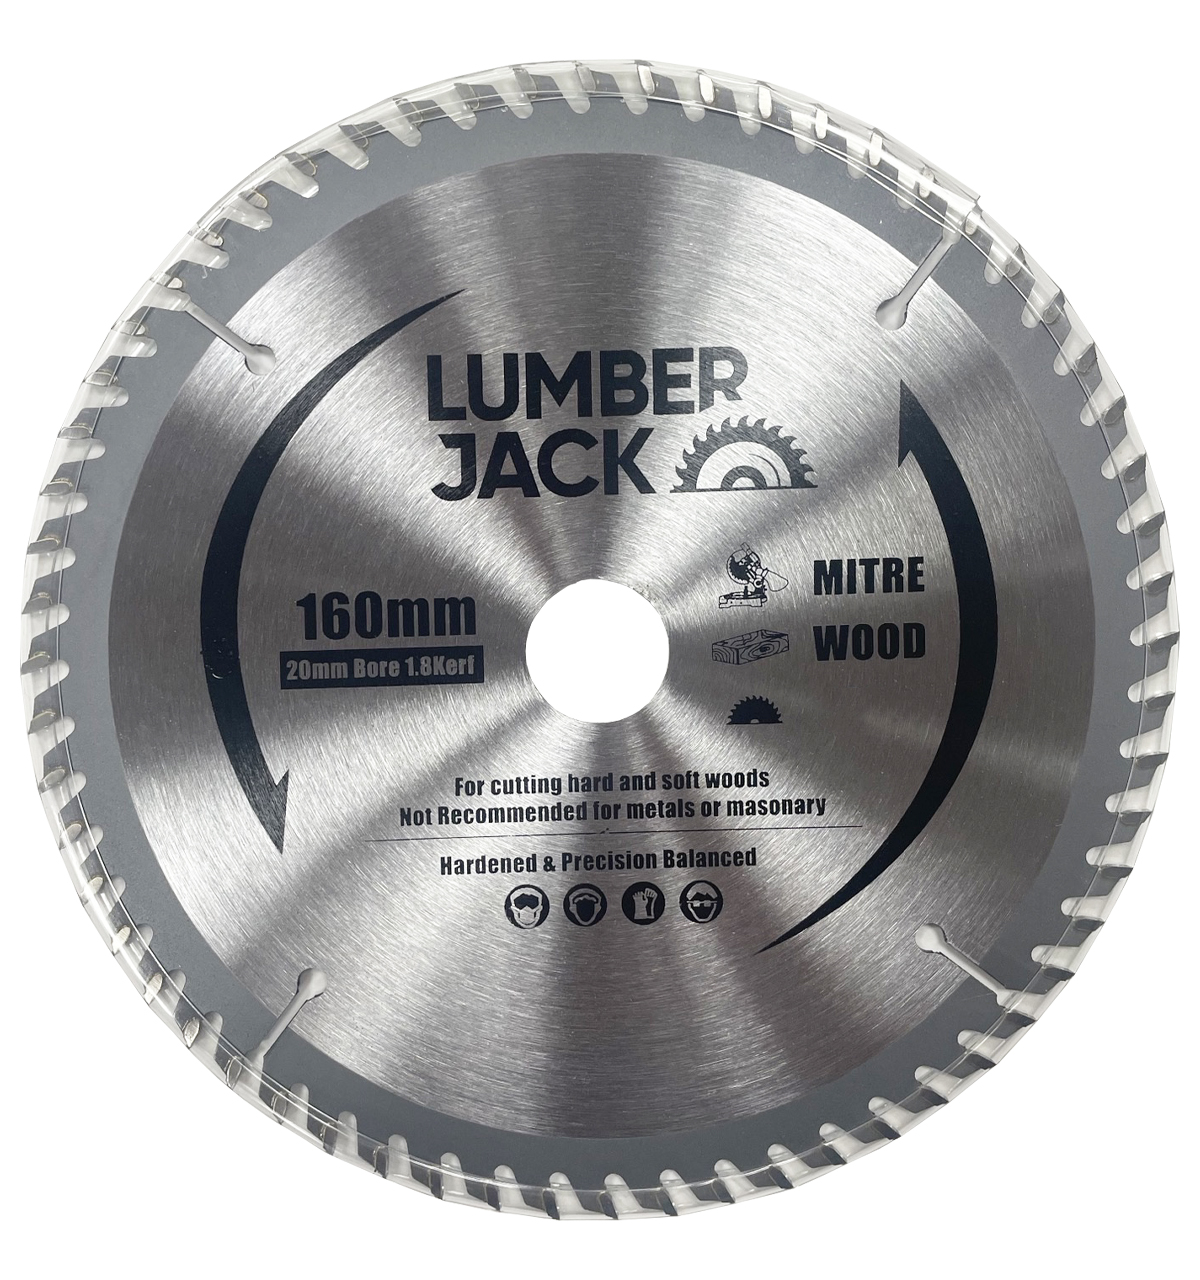 Lumberjack 160mm 36T Trade Circular Saw Blades 20mm Bore